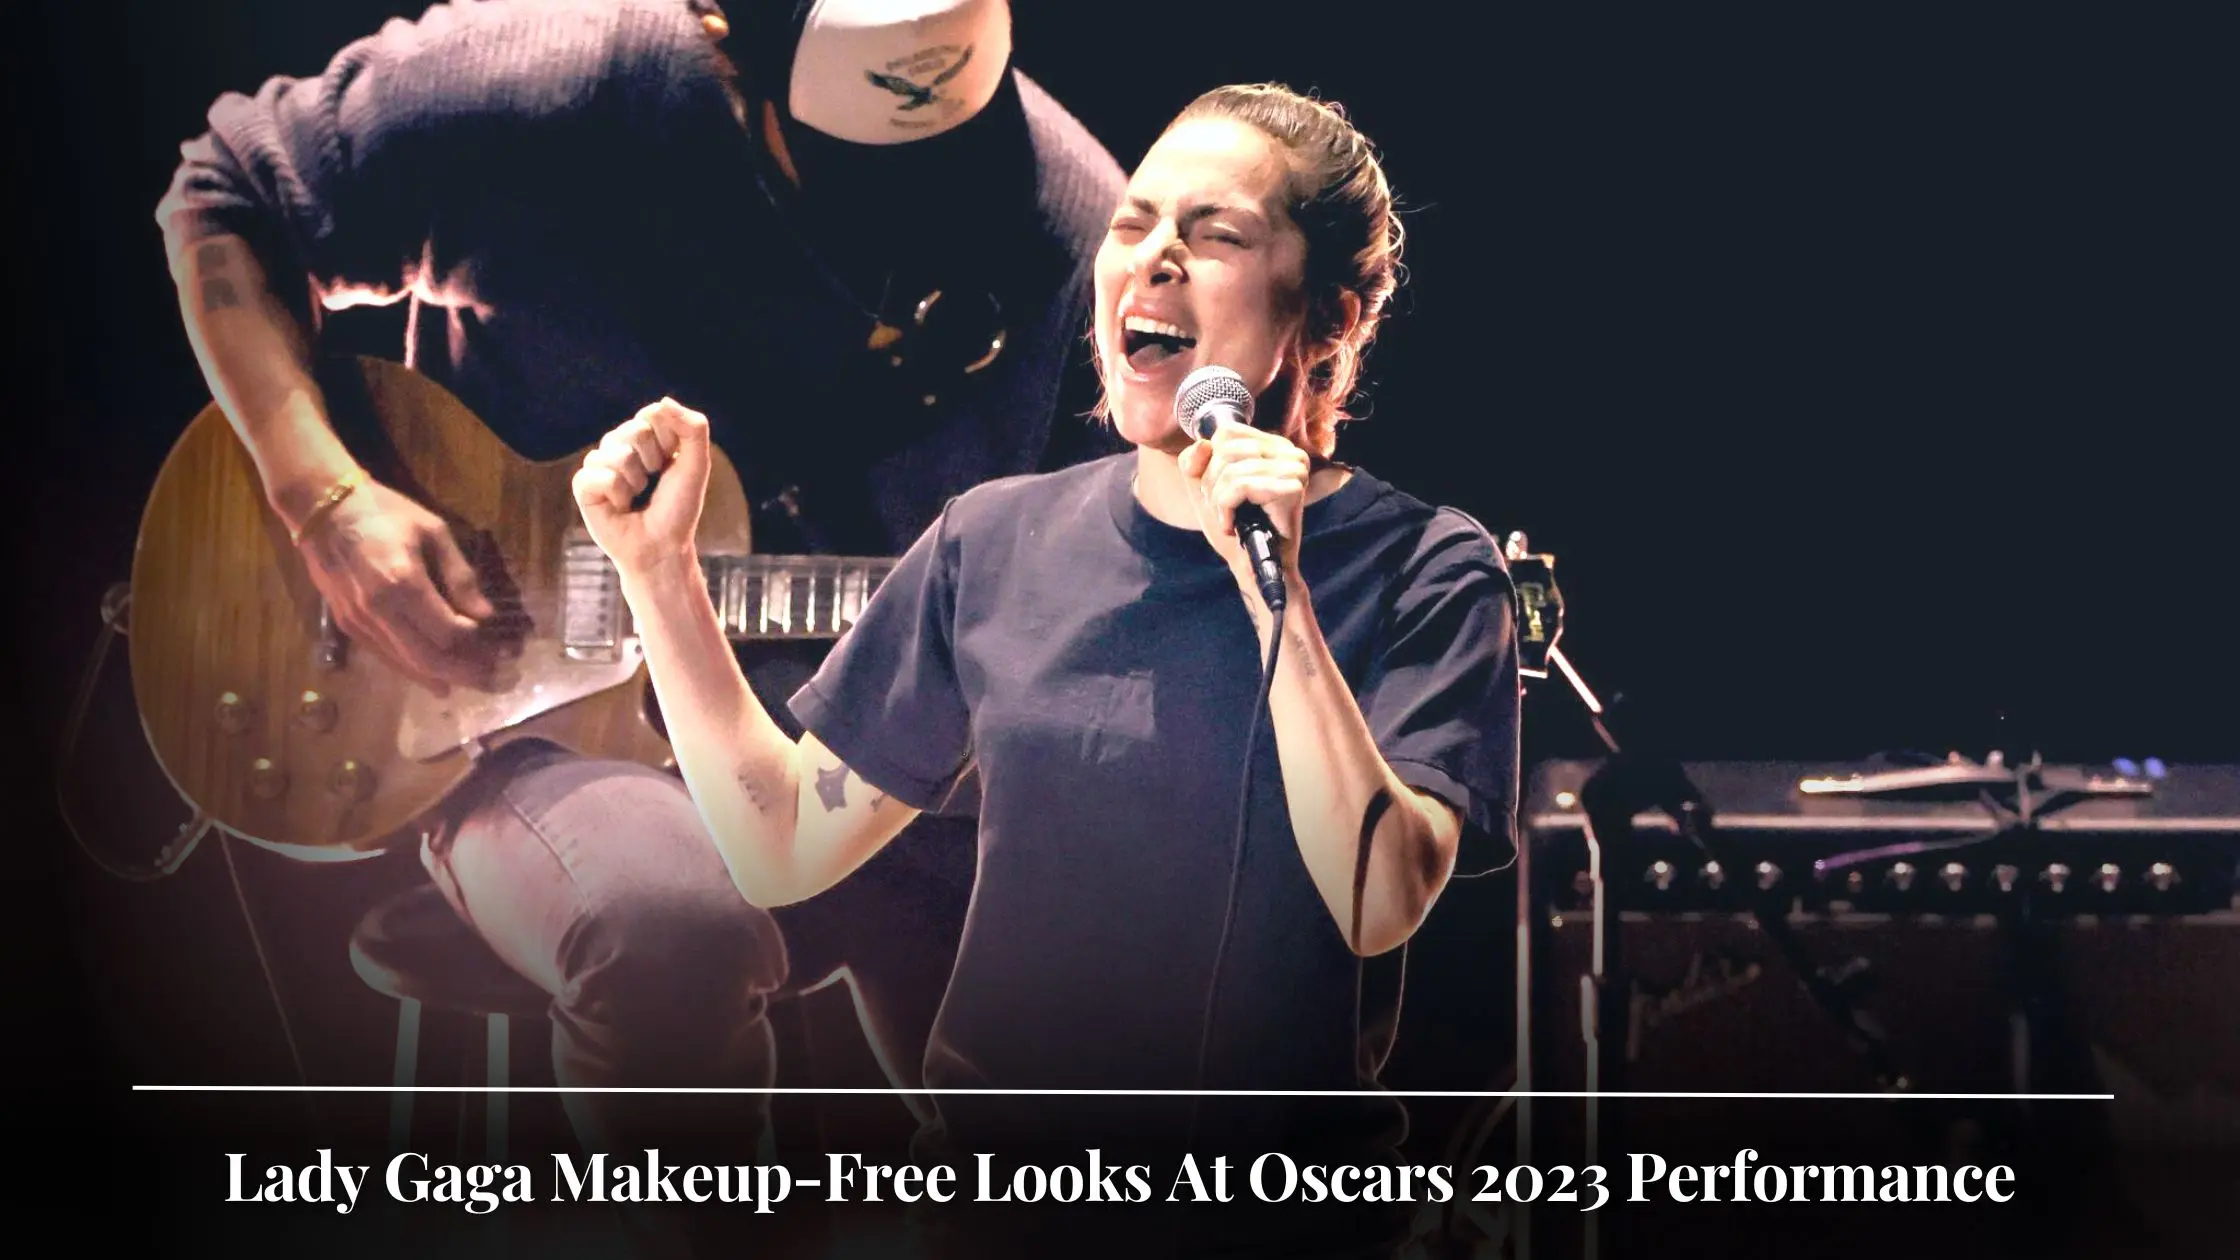 Lady Gaga Makeup-Free Looks At Oscars 2023 Performance